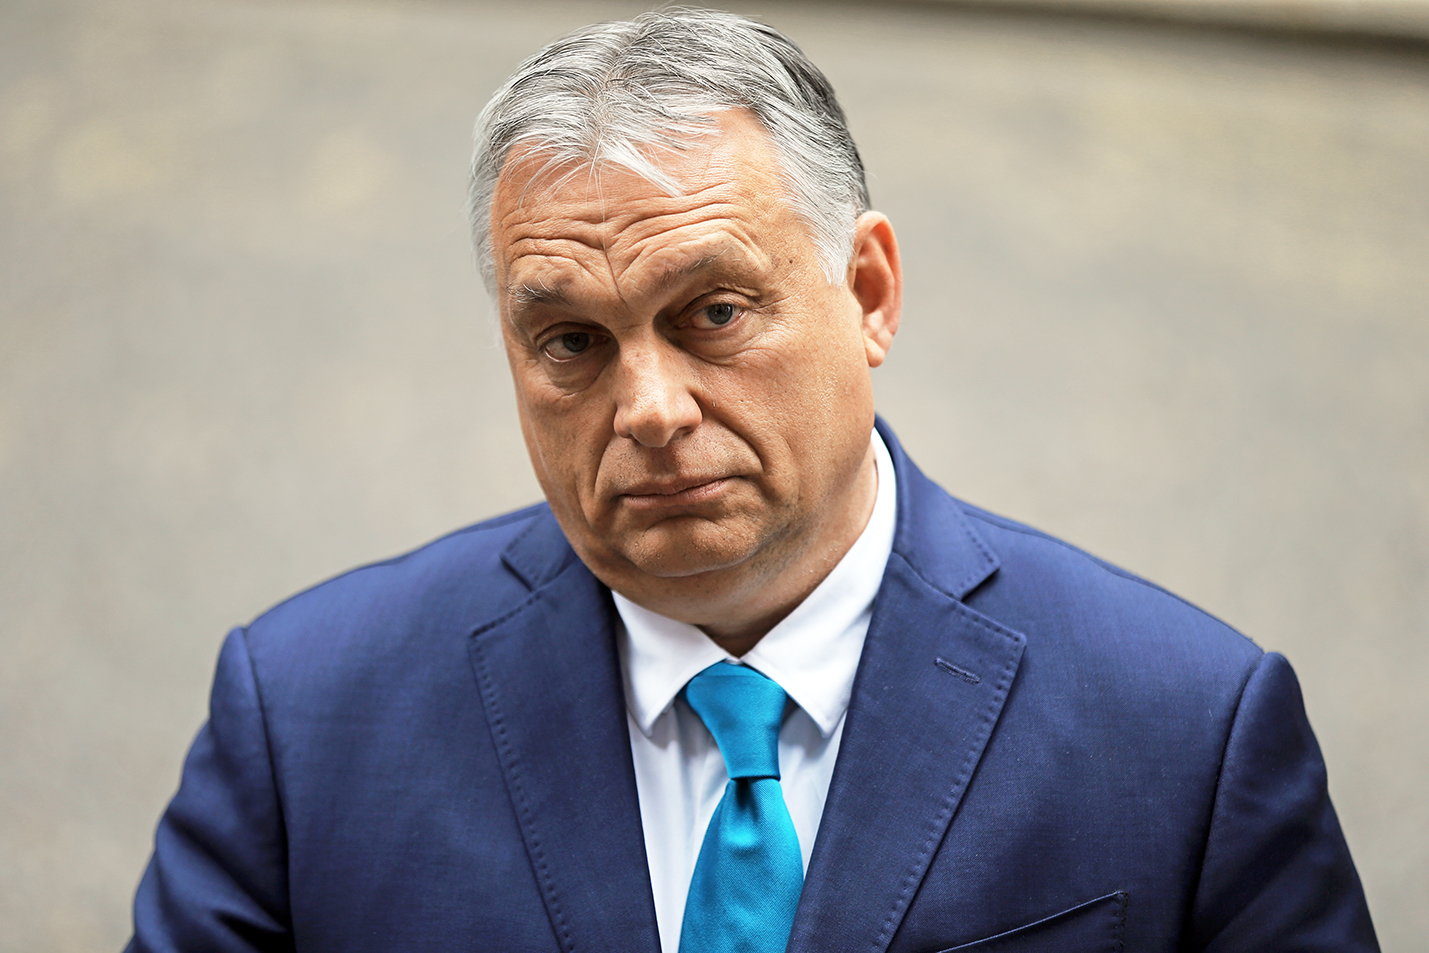 New Orbán cabinet member picks announced